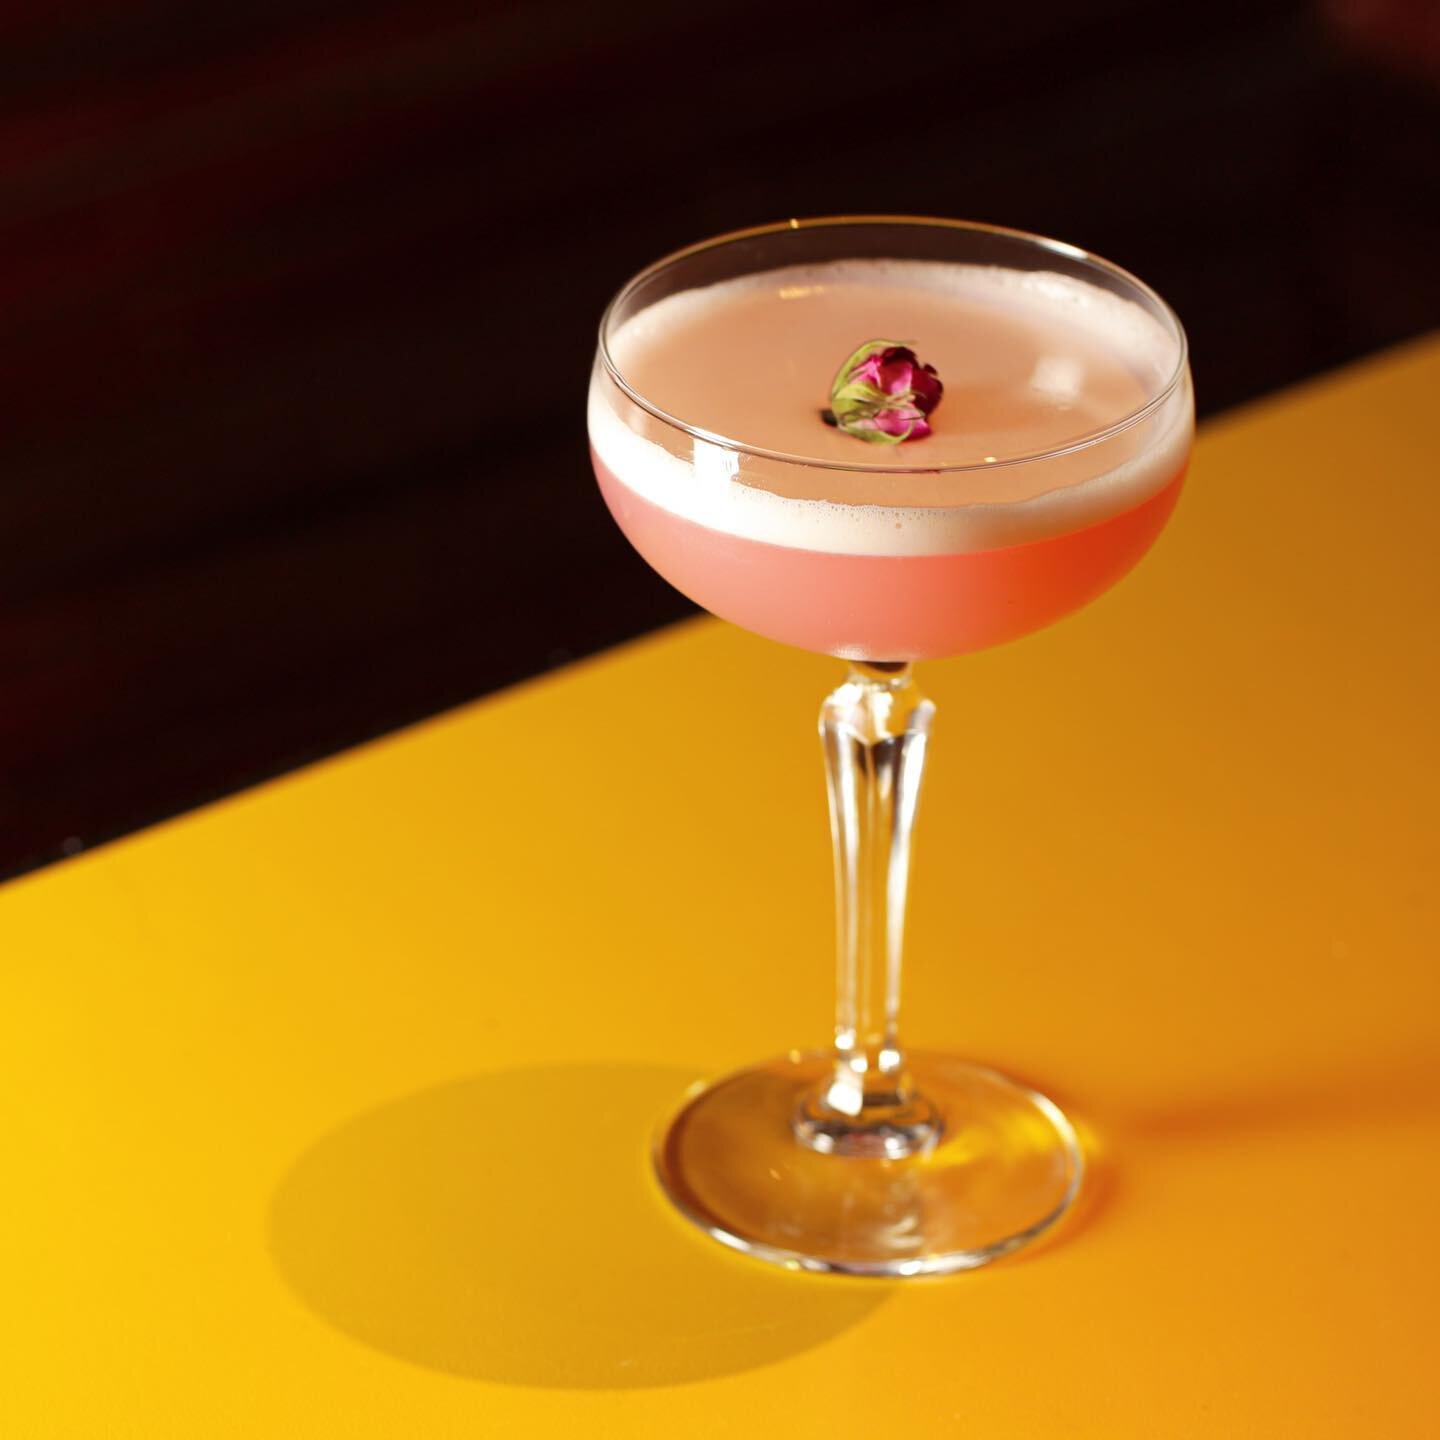 La Rosa 🌹 - Absolut Vodka Vanilla, Chambord, Homemade Rose Syrup, Lime, Egg White. One of incredible new signature cocktails!
.
.
.
Walk-ins welcome or visit NoName.bar to make a booking!
📸@mrfoambuffalo
#thebarwithnoname #noname #secretbar #snailb